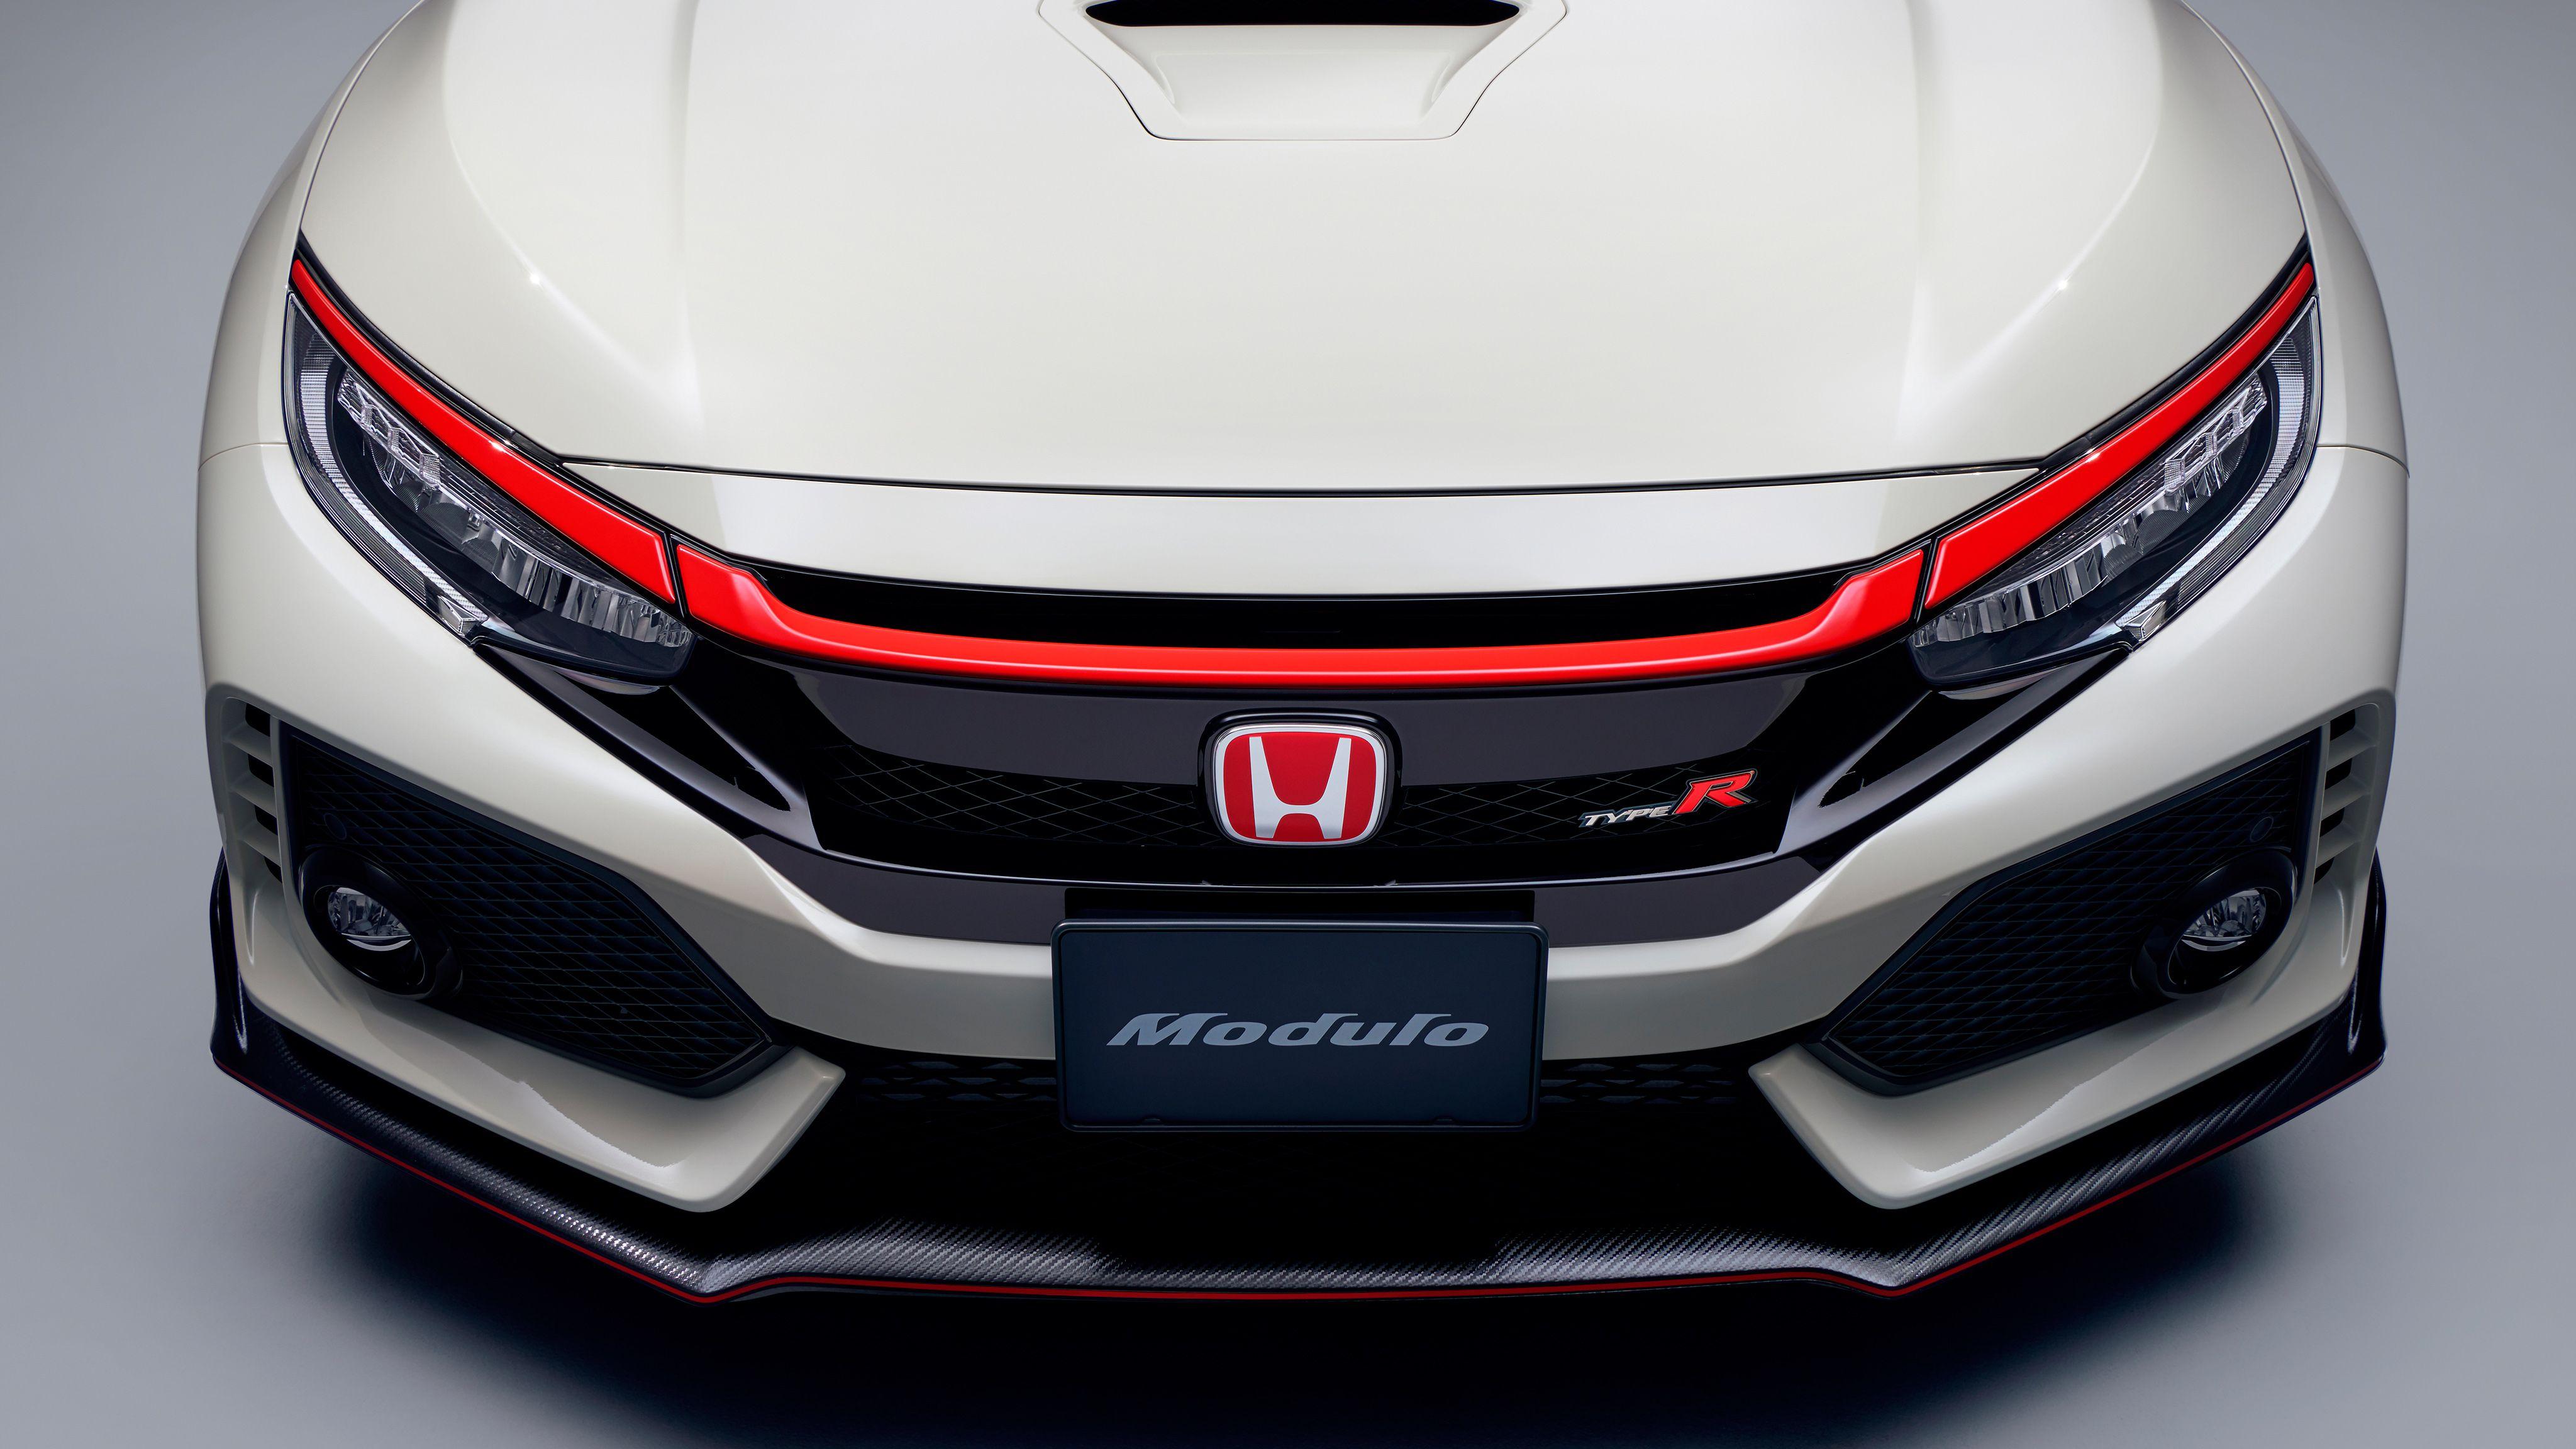 Modulo Honda Civic Type R 2017 Wallpaper. HD Car Wallpaper